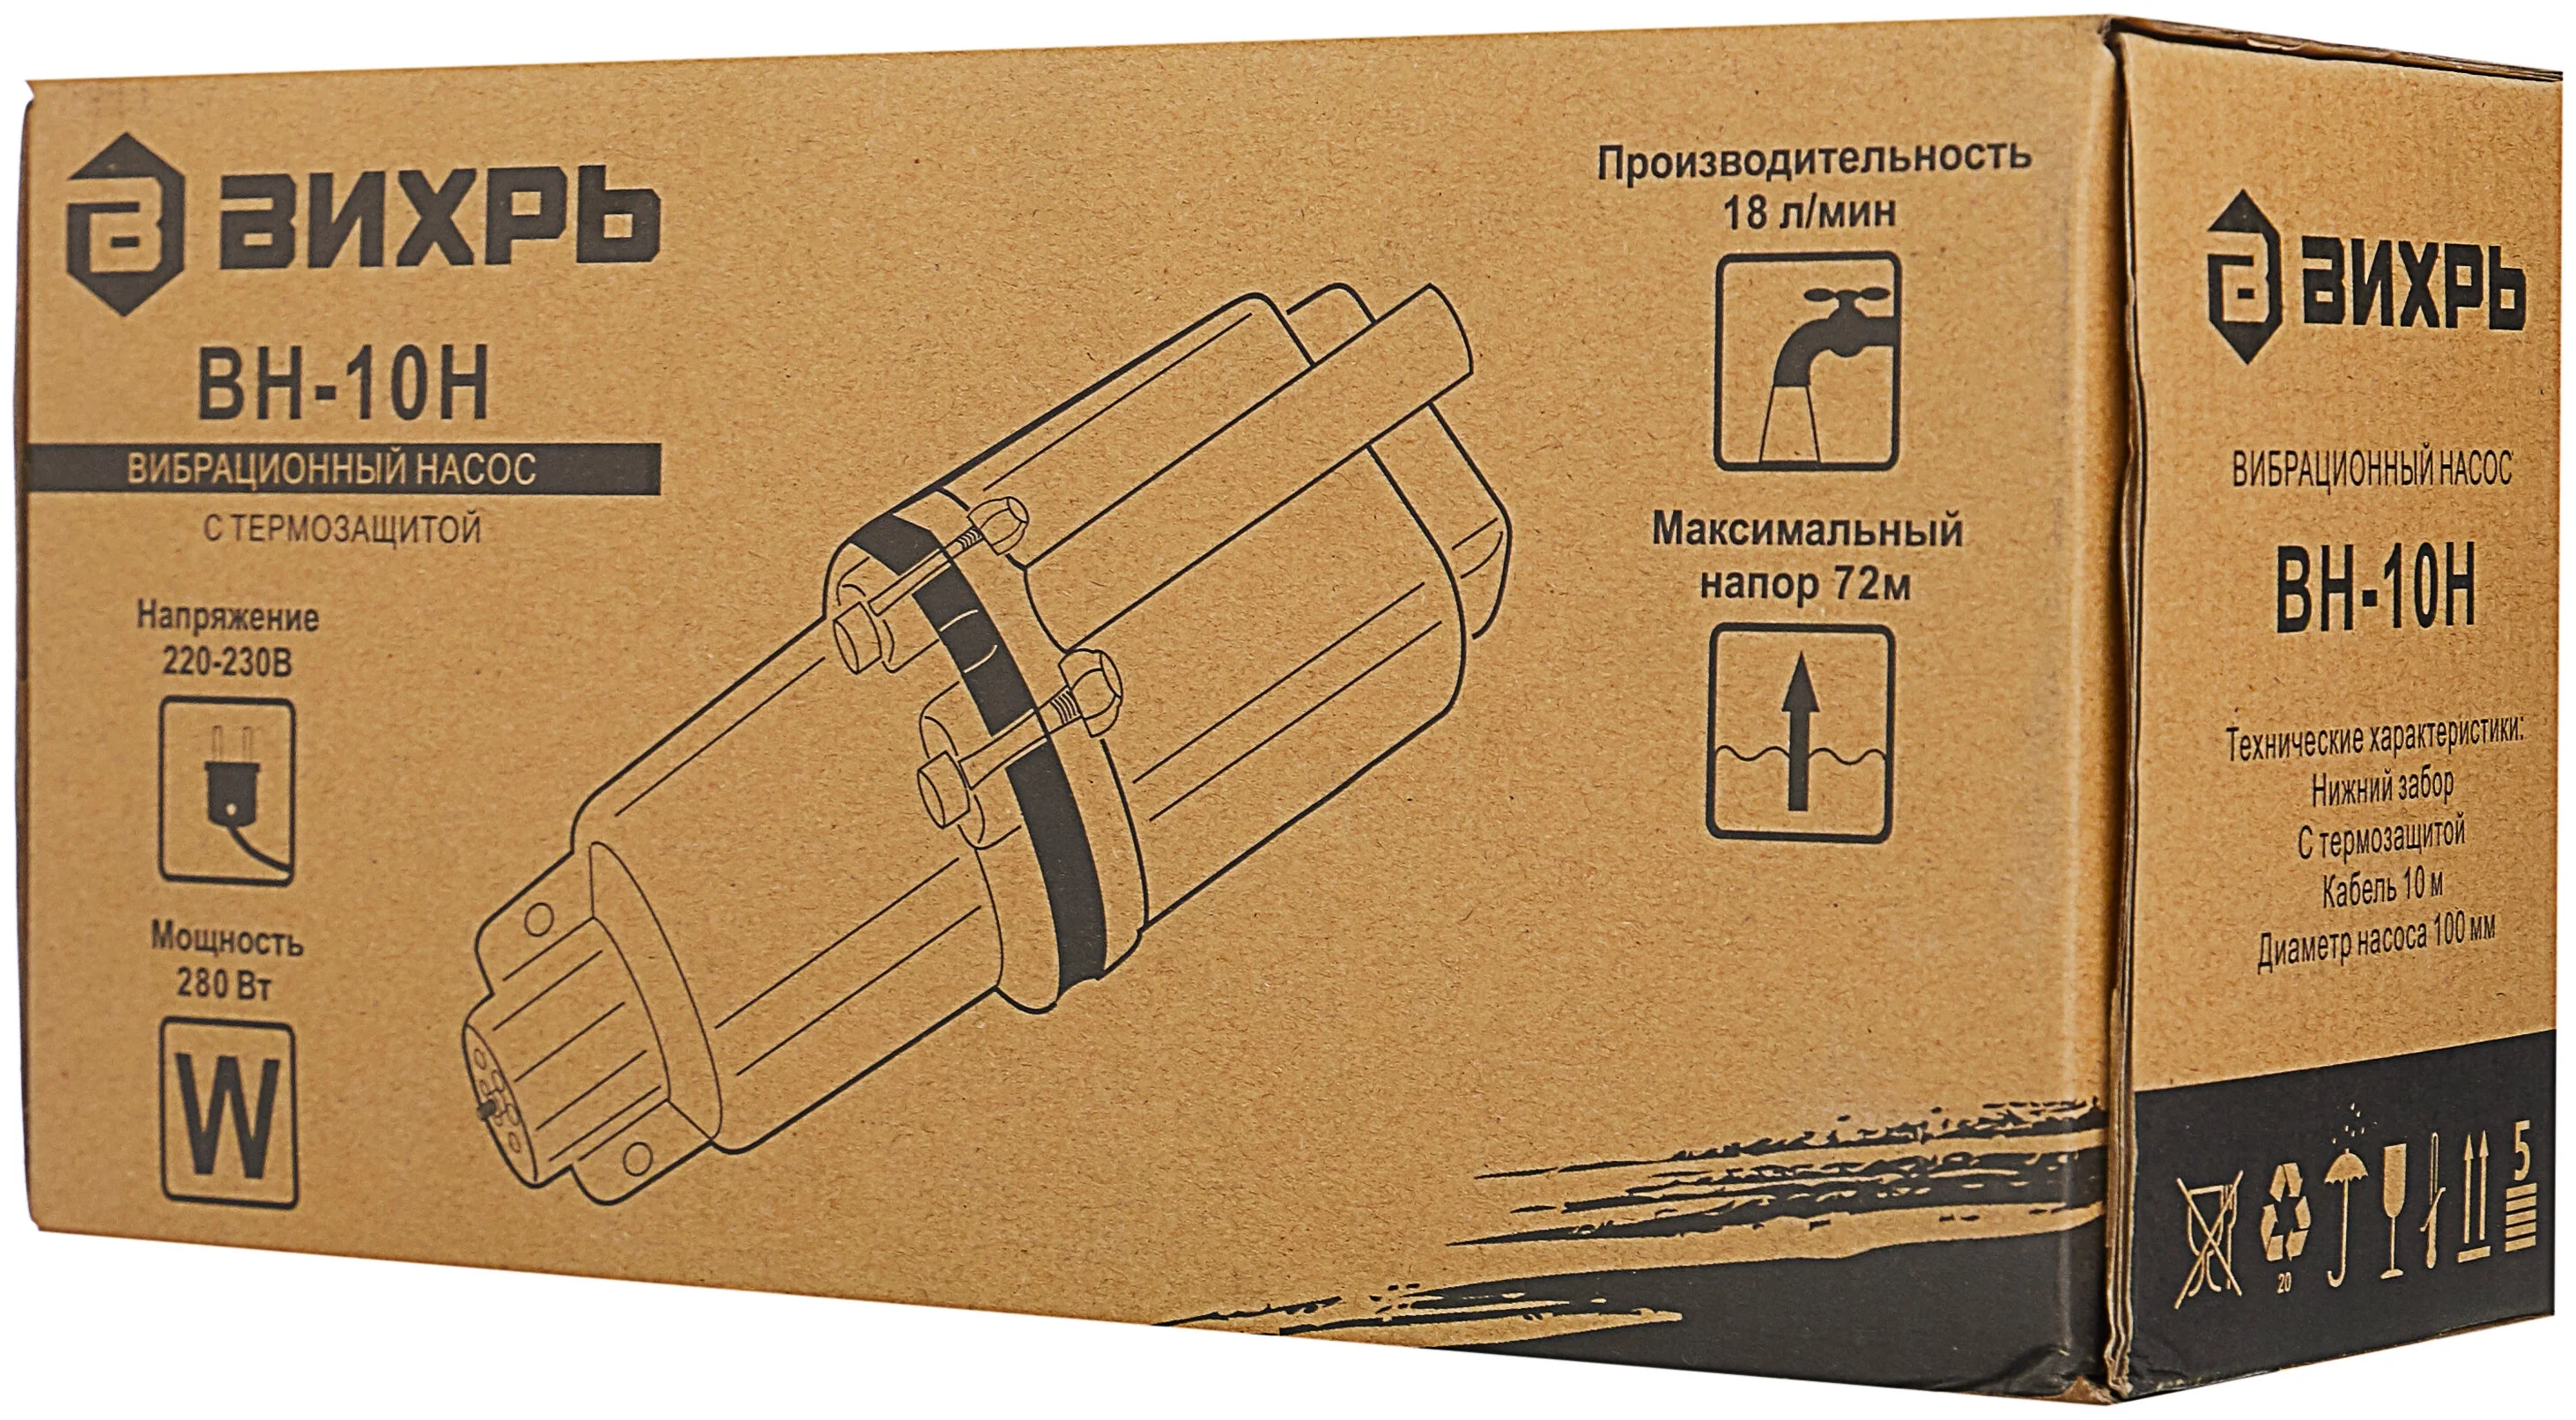 ВИХРЬ ВН-10Н (280 Вт) - защита: от перегрева